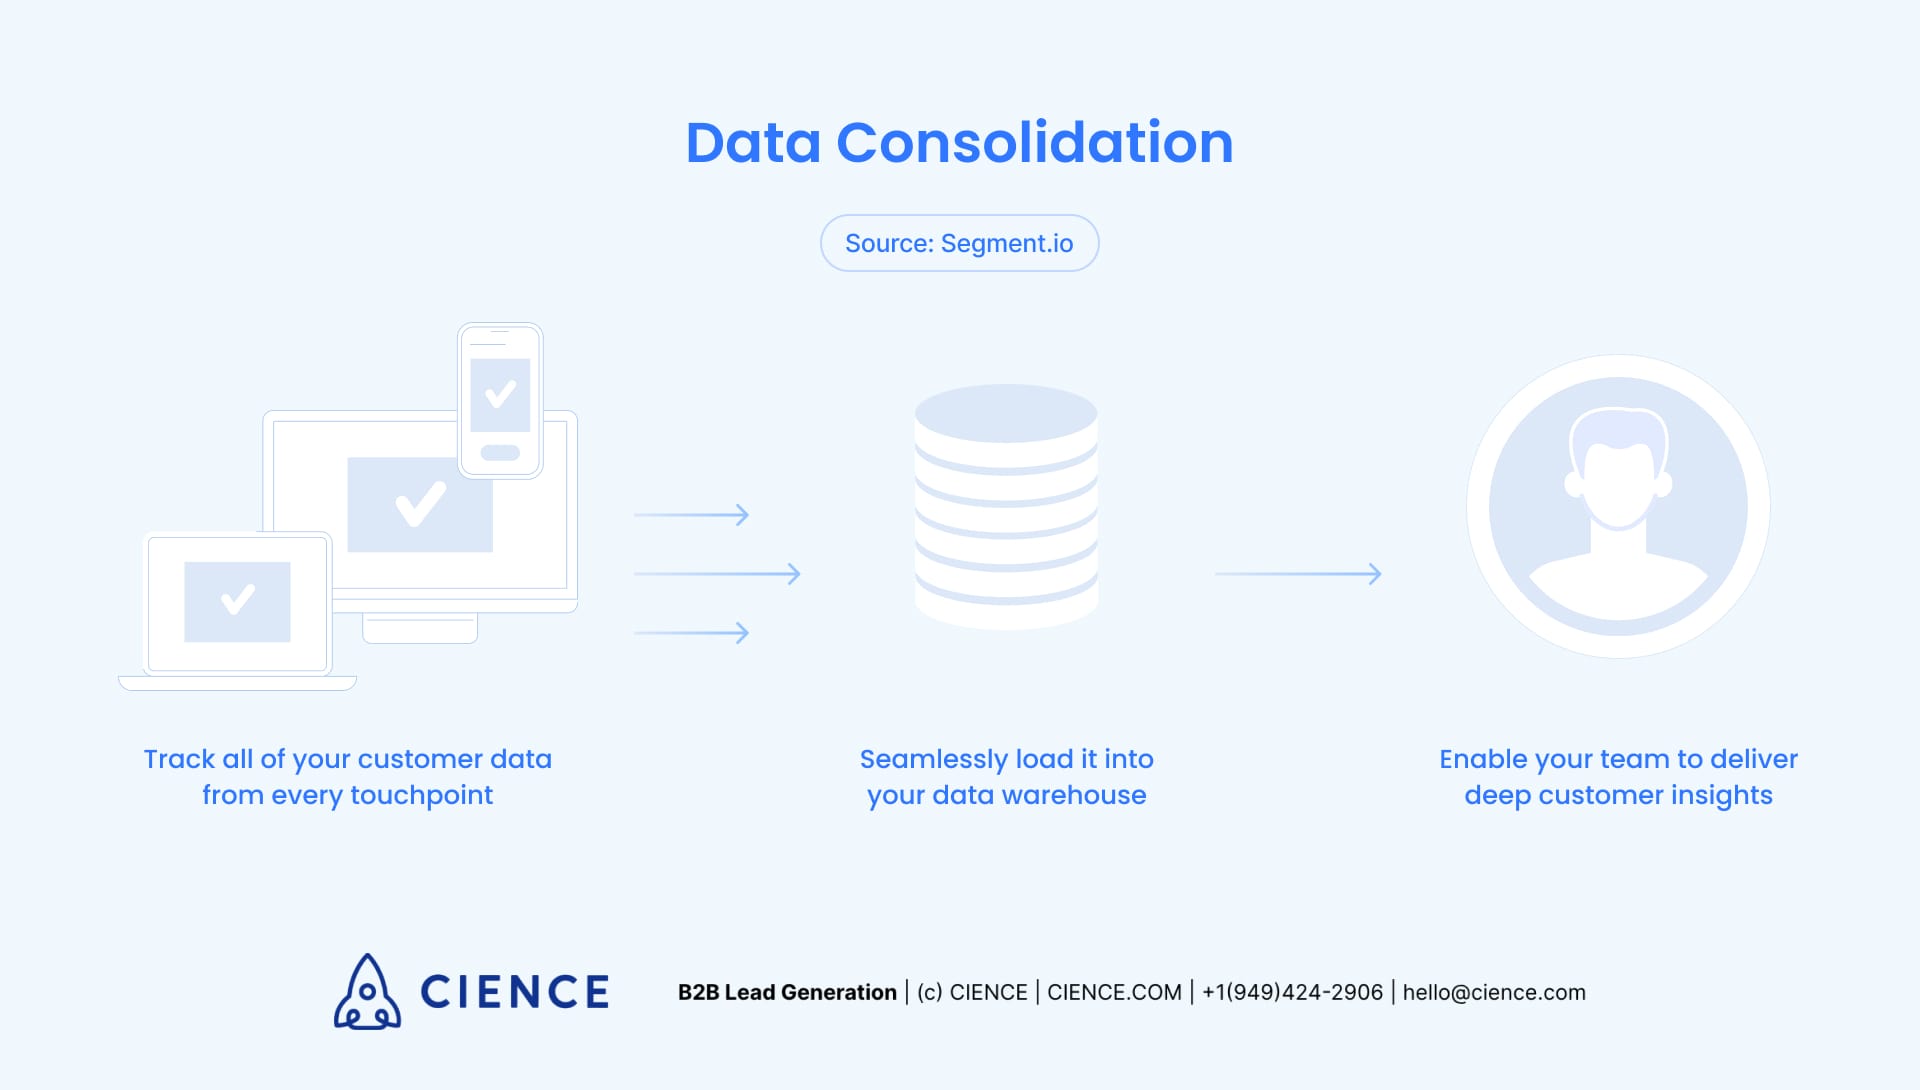 Data Consolidation Process